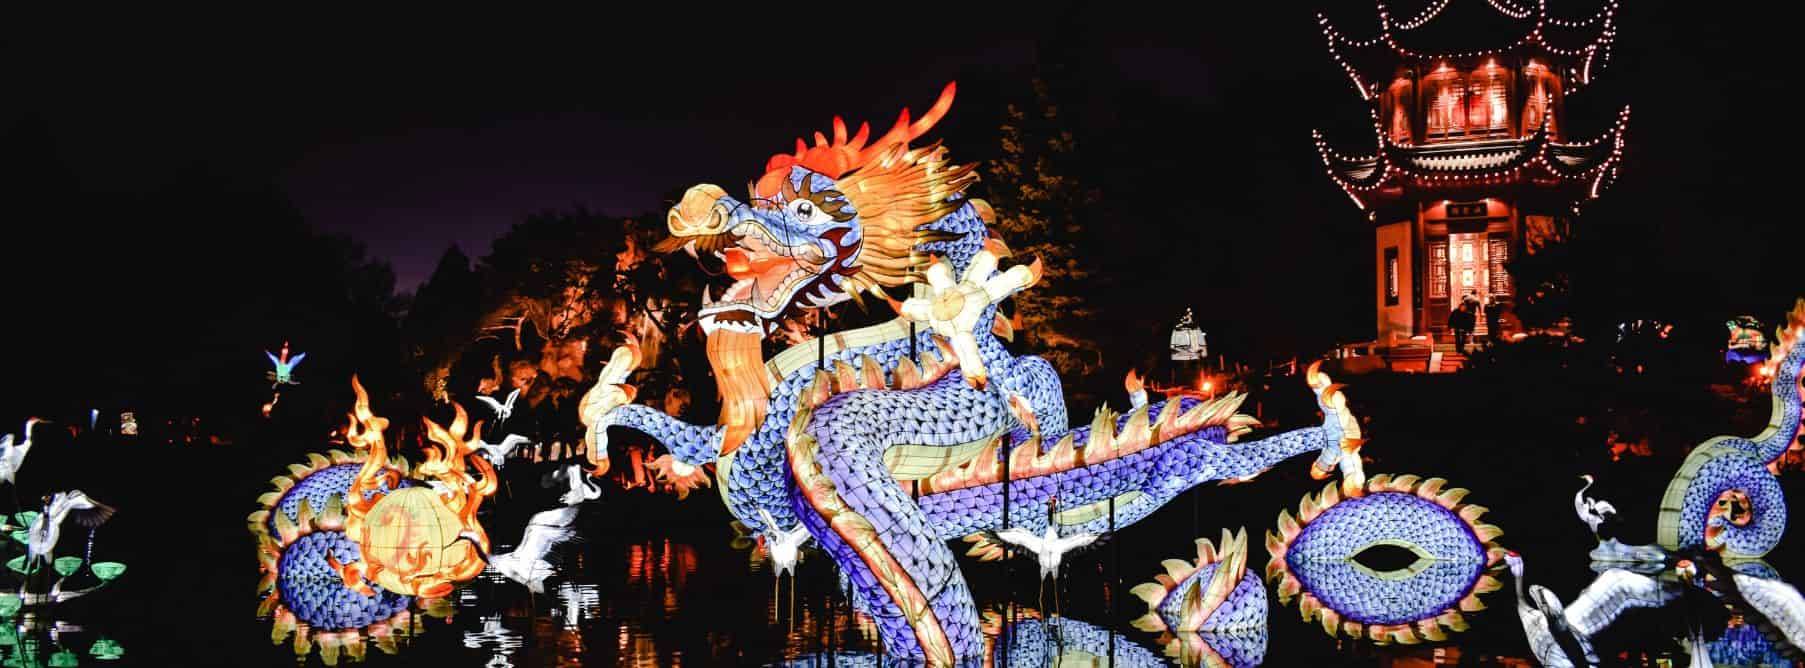 ni hao kai lan dragon boat festival